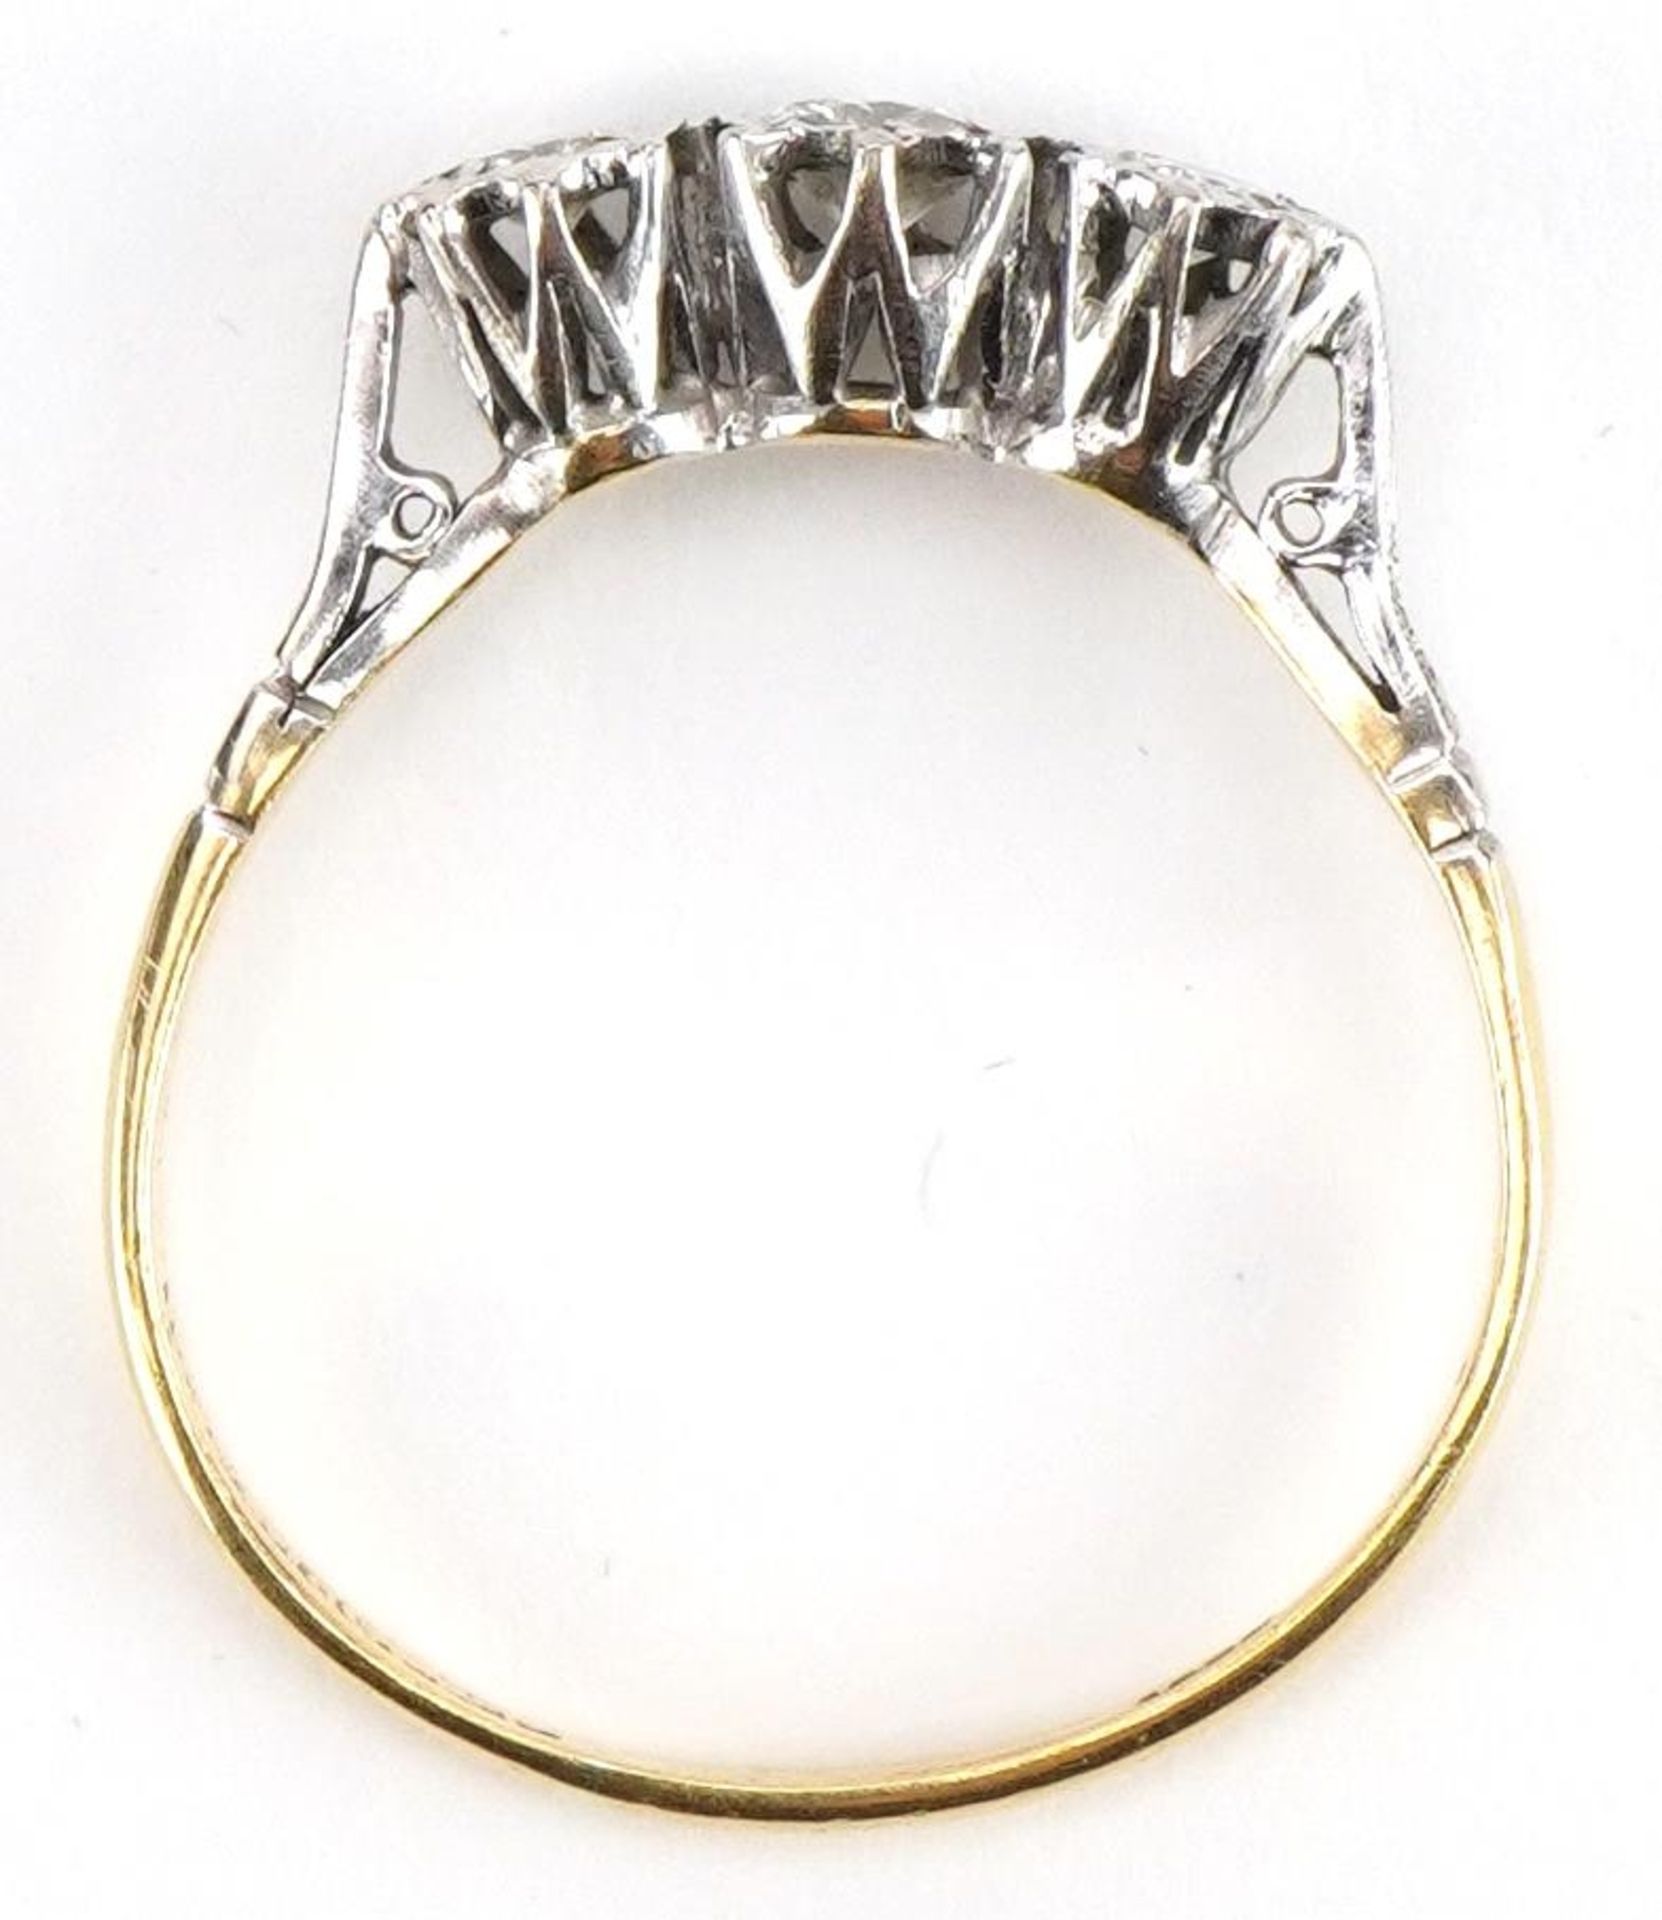 18ct gold and platinum diamond three stone ring, the largest diamond approximately 0.20 carat, - Image 3 of 4